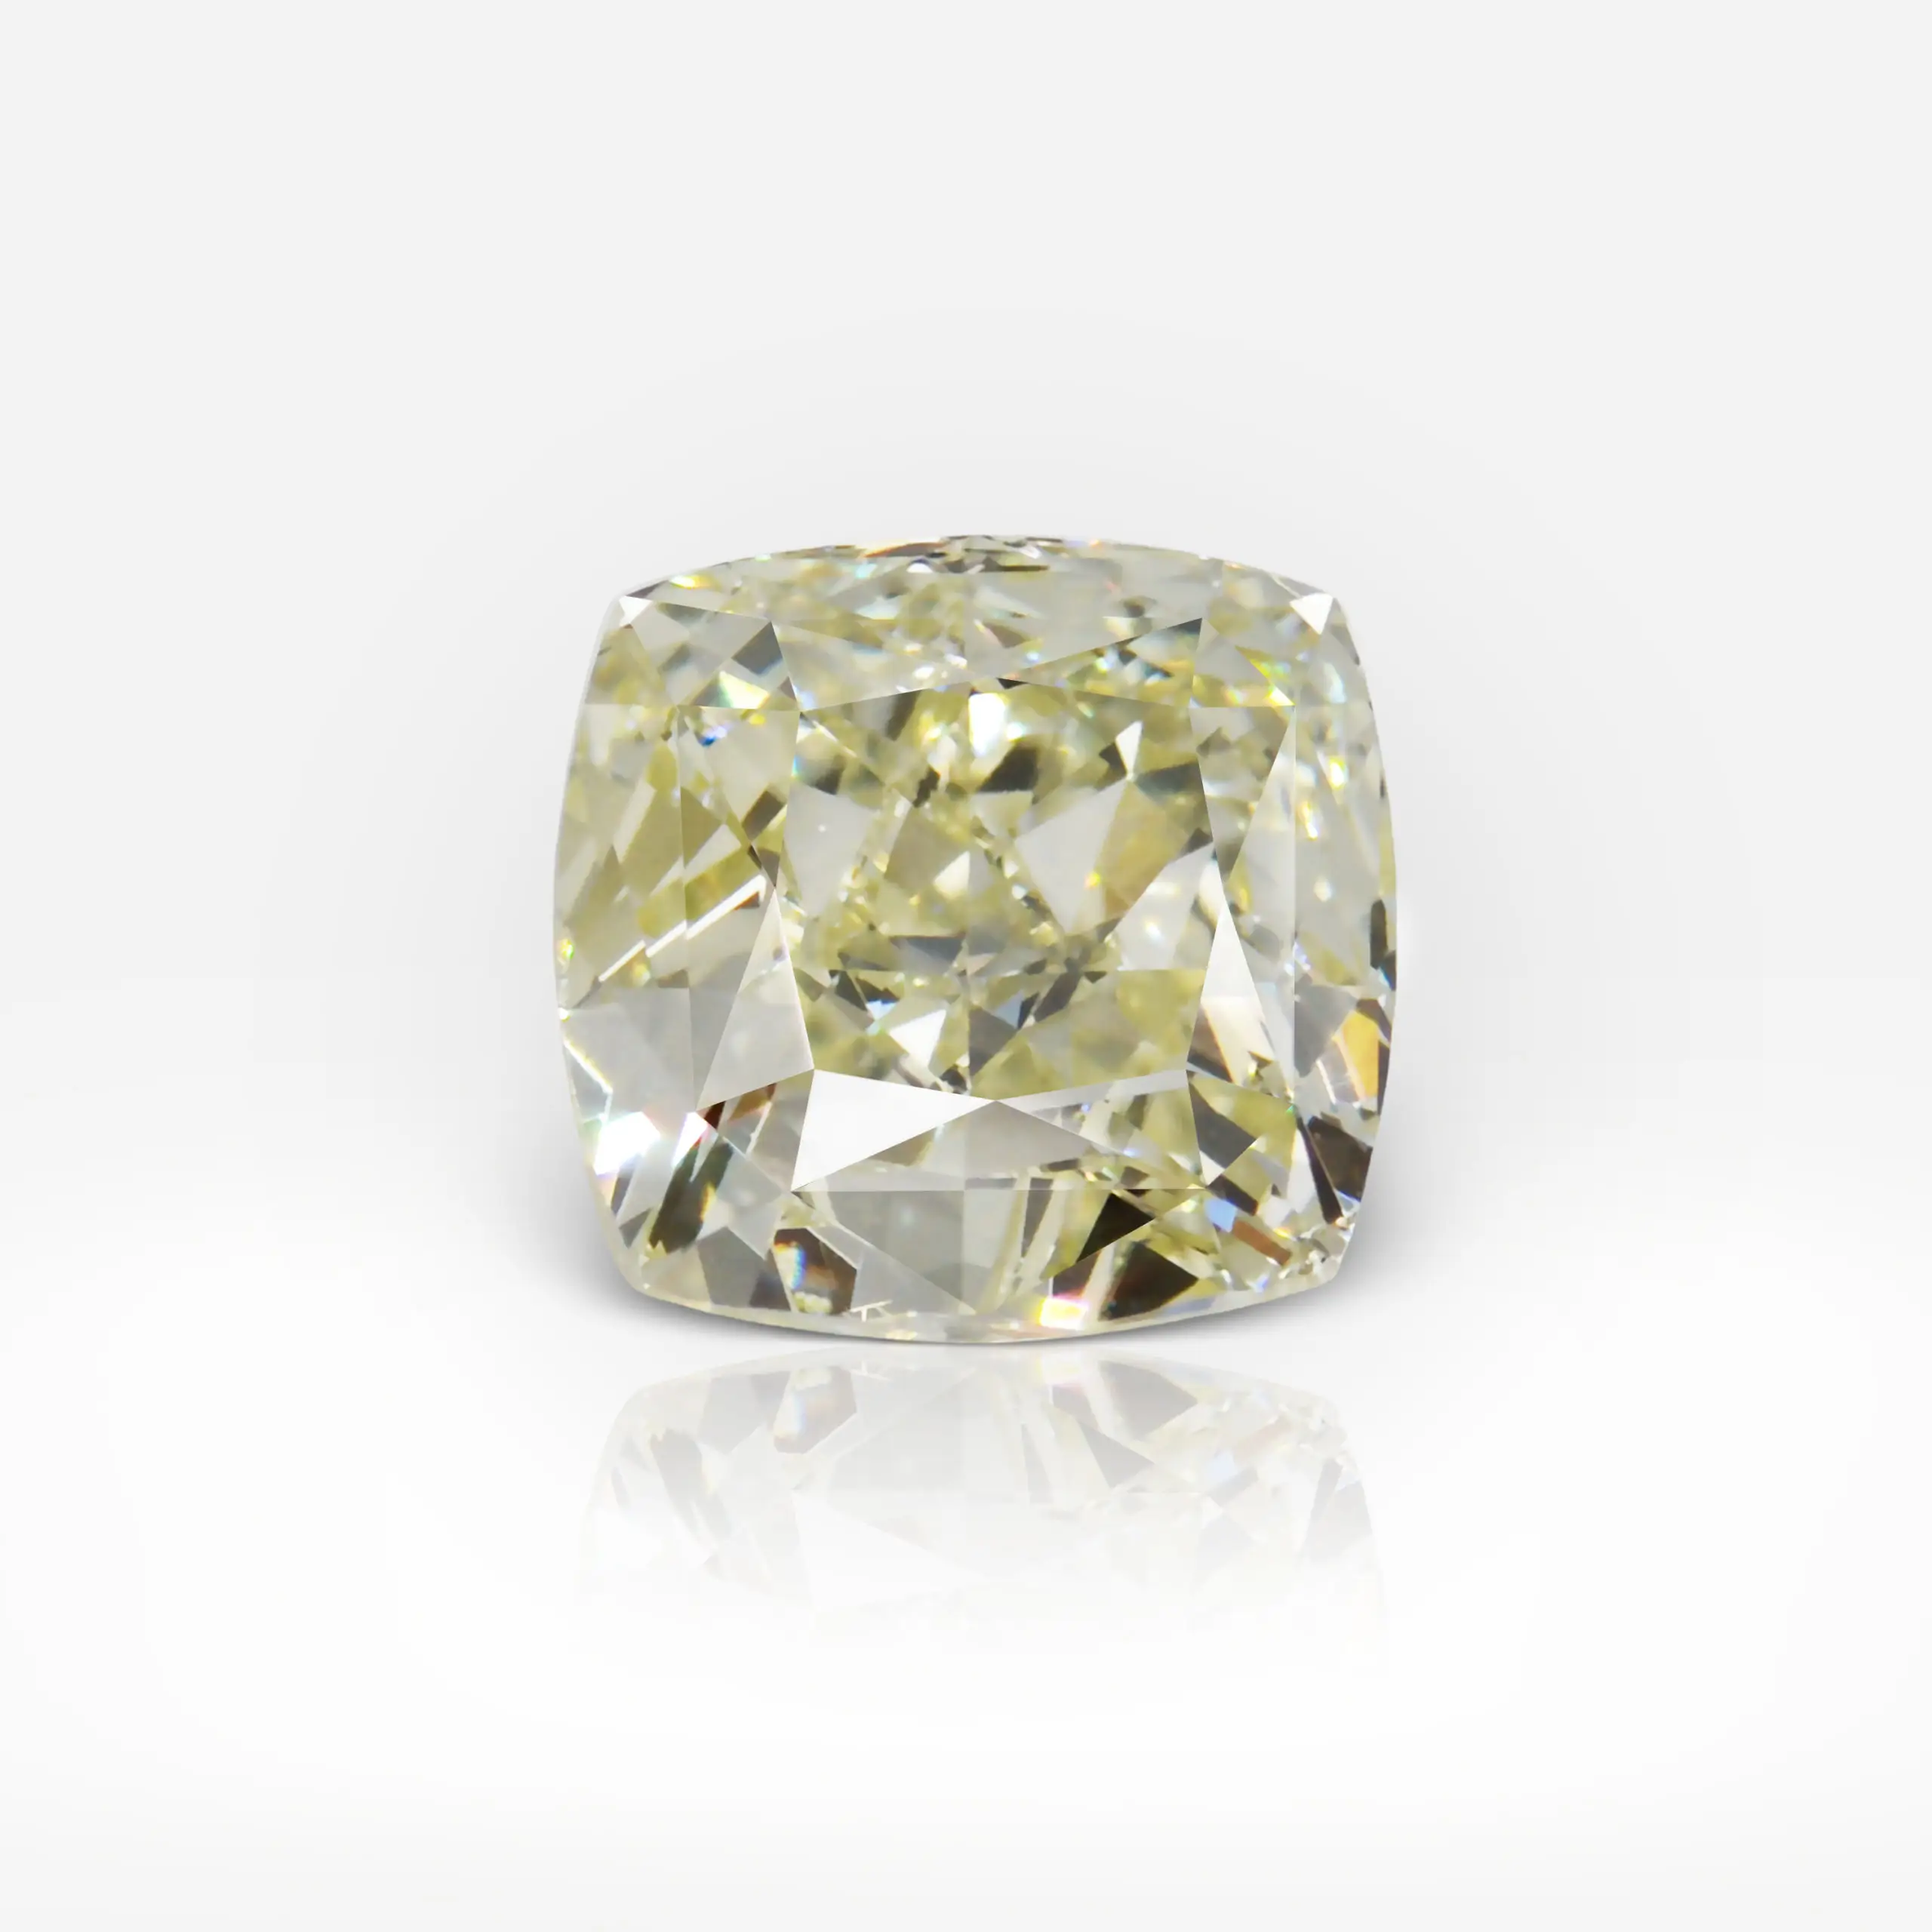 1.71 carat Fancy Light Brownish Greenish Yellow VS2 Radiant Shape Diamond GIA - picture 1